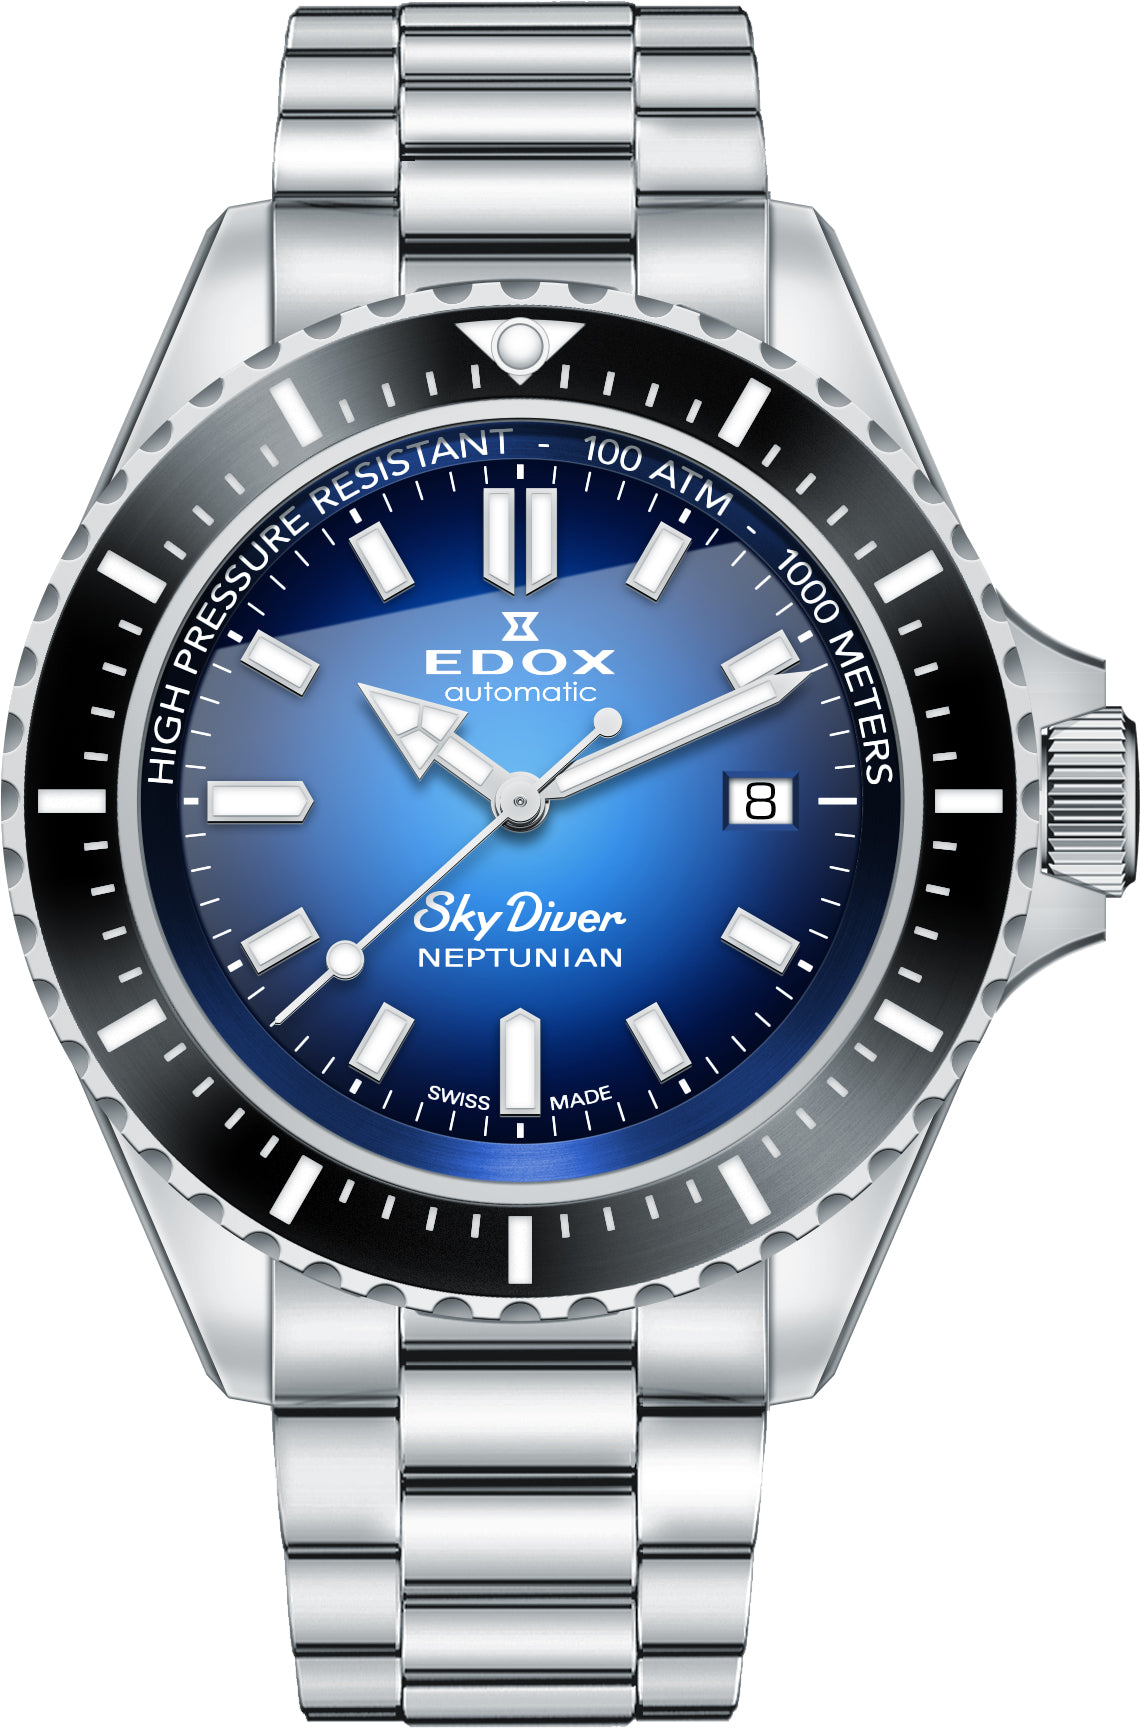 Photos - Wrist Watch EDOX Watch Skydiver Neptunian Automatic 3 Hands - Blue EDX-063 